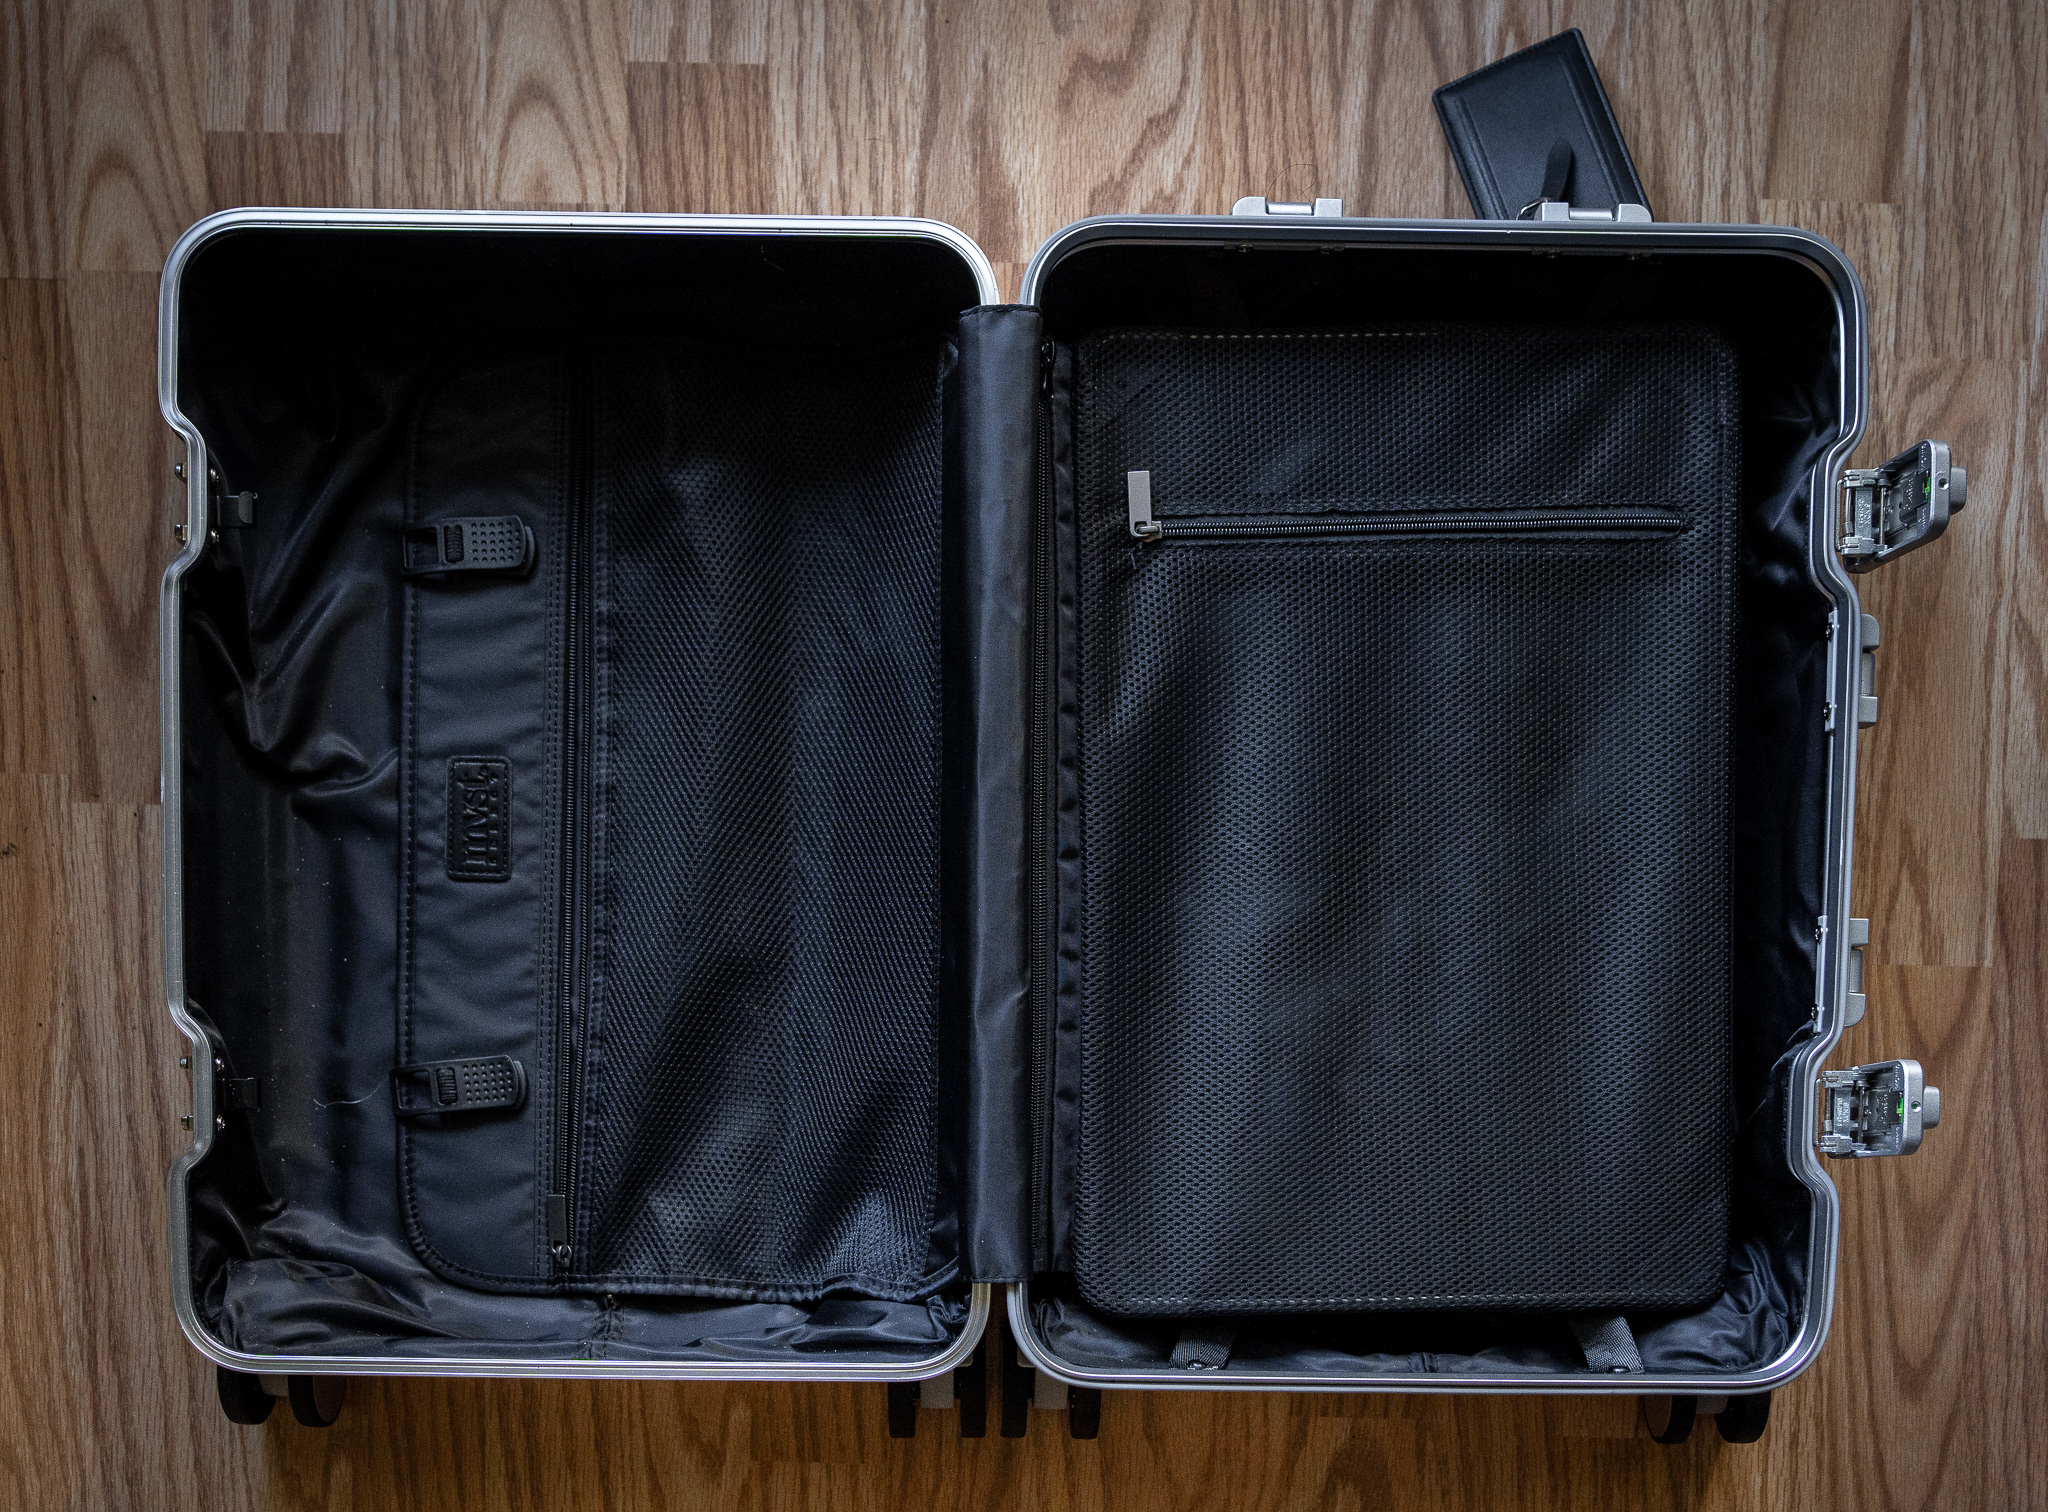 MVST Review Carry-on Trek Aluminum Suitcase inside